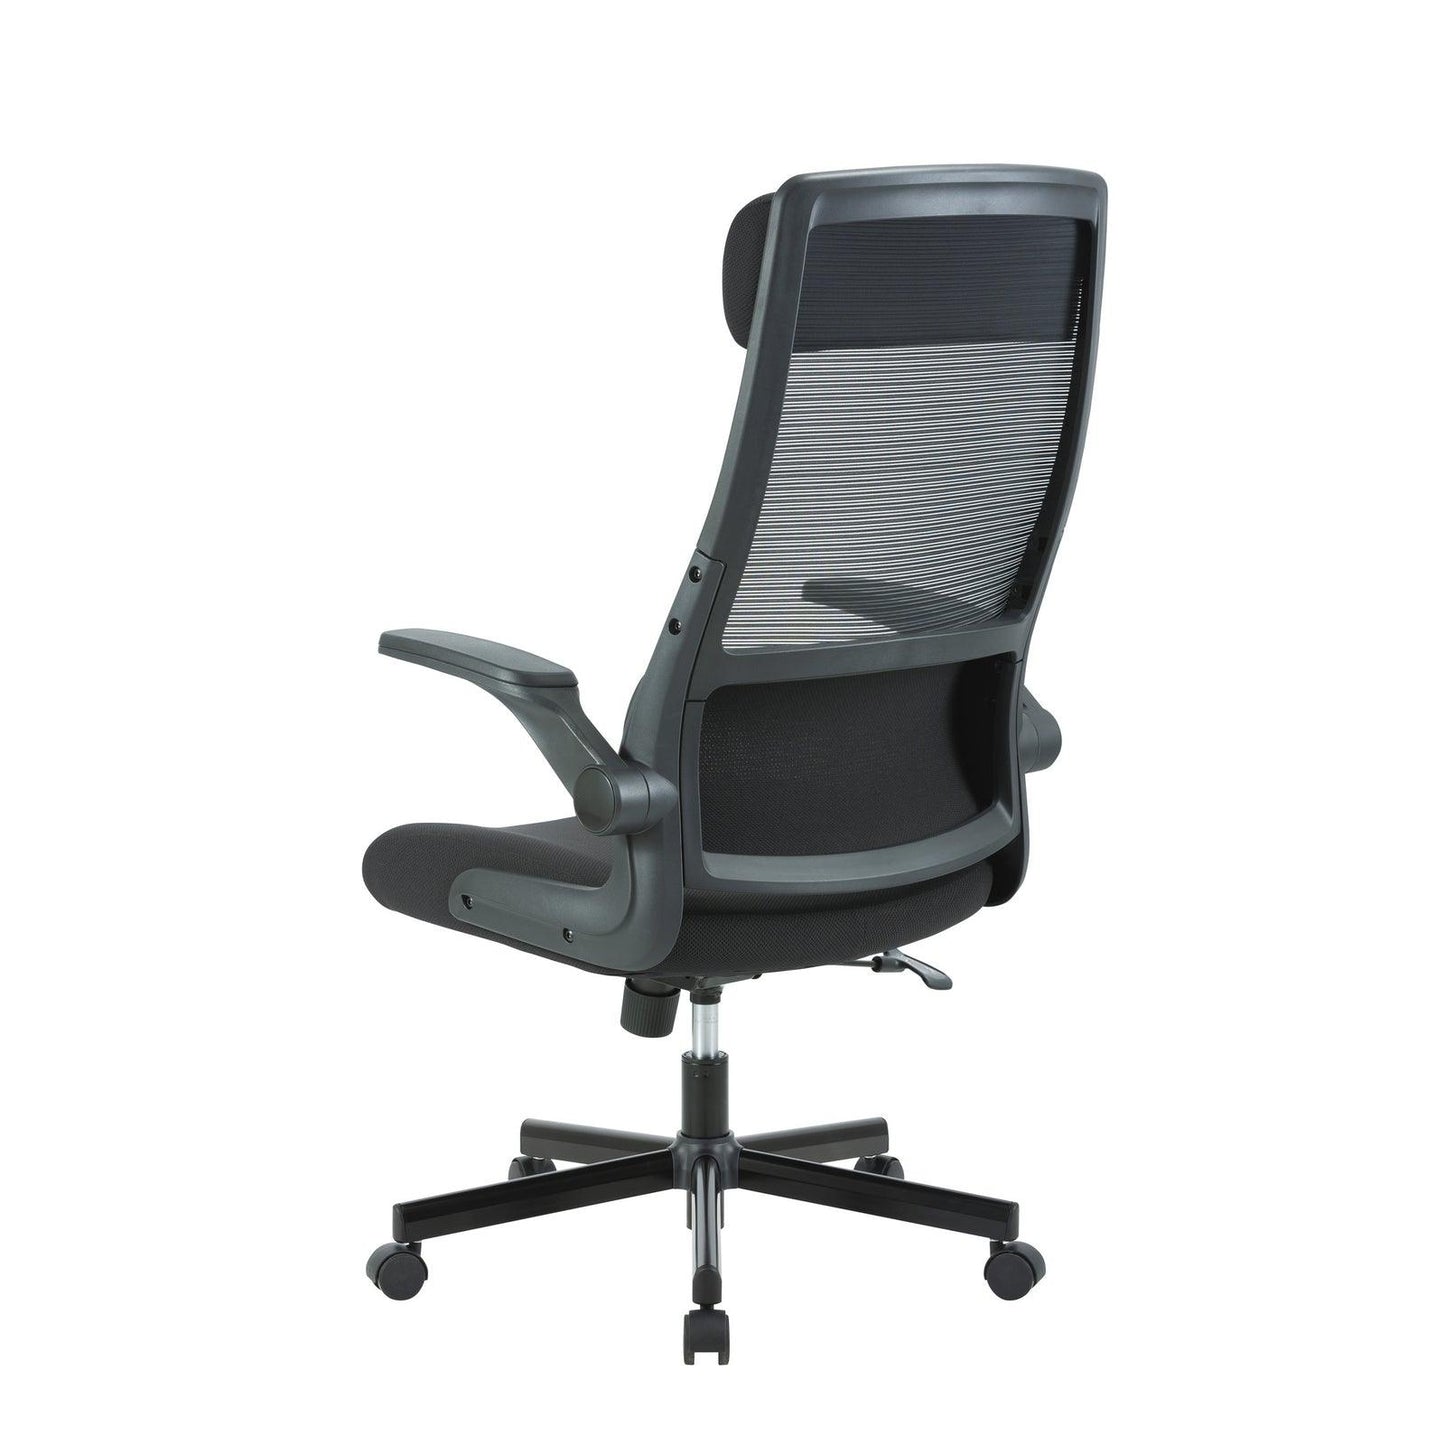 Mesh Ergonomic Office Chair - Black - Office/Gaming ChairsOC8251-UN 3